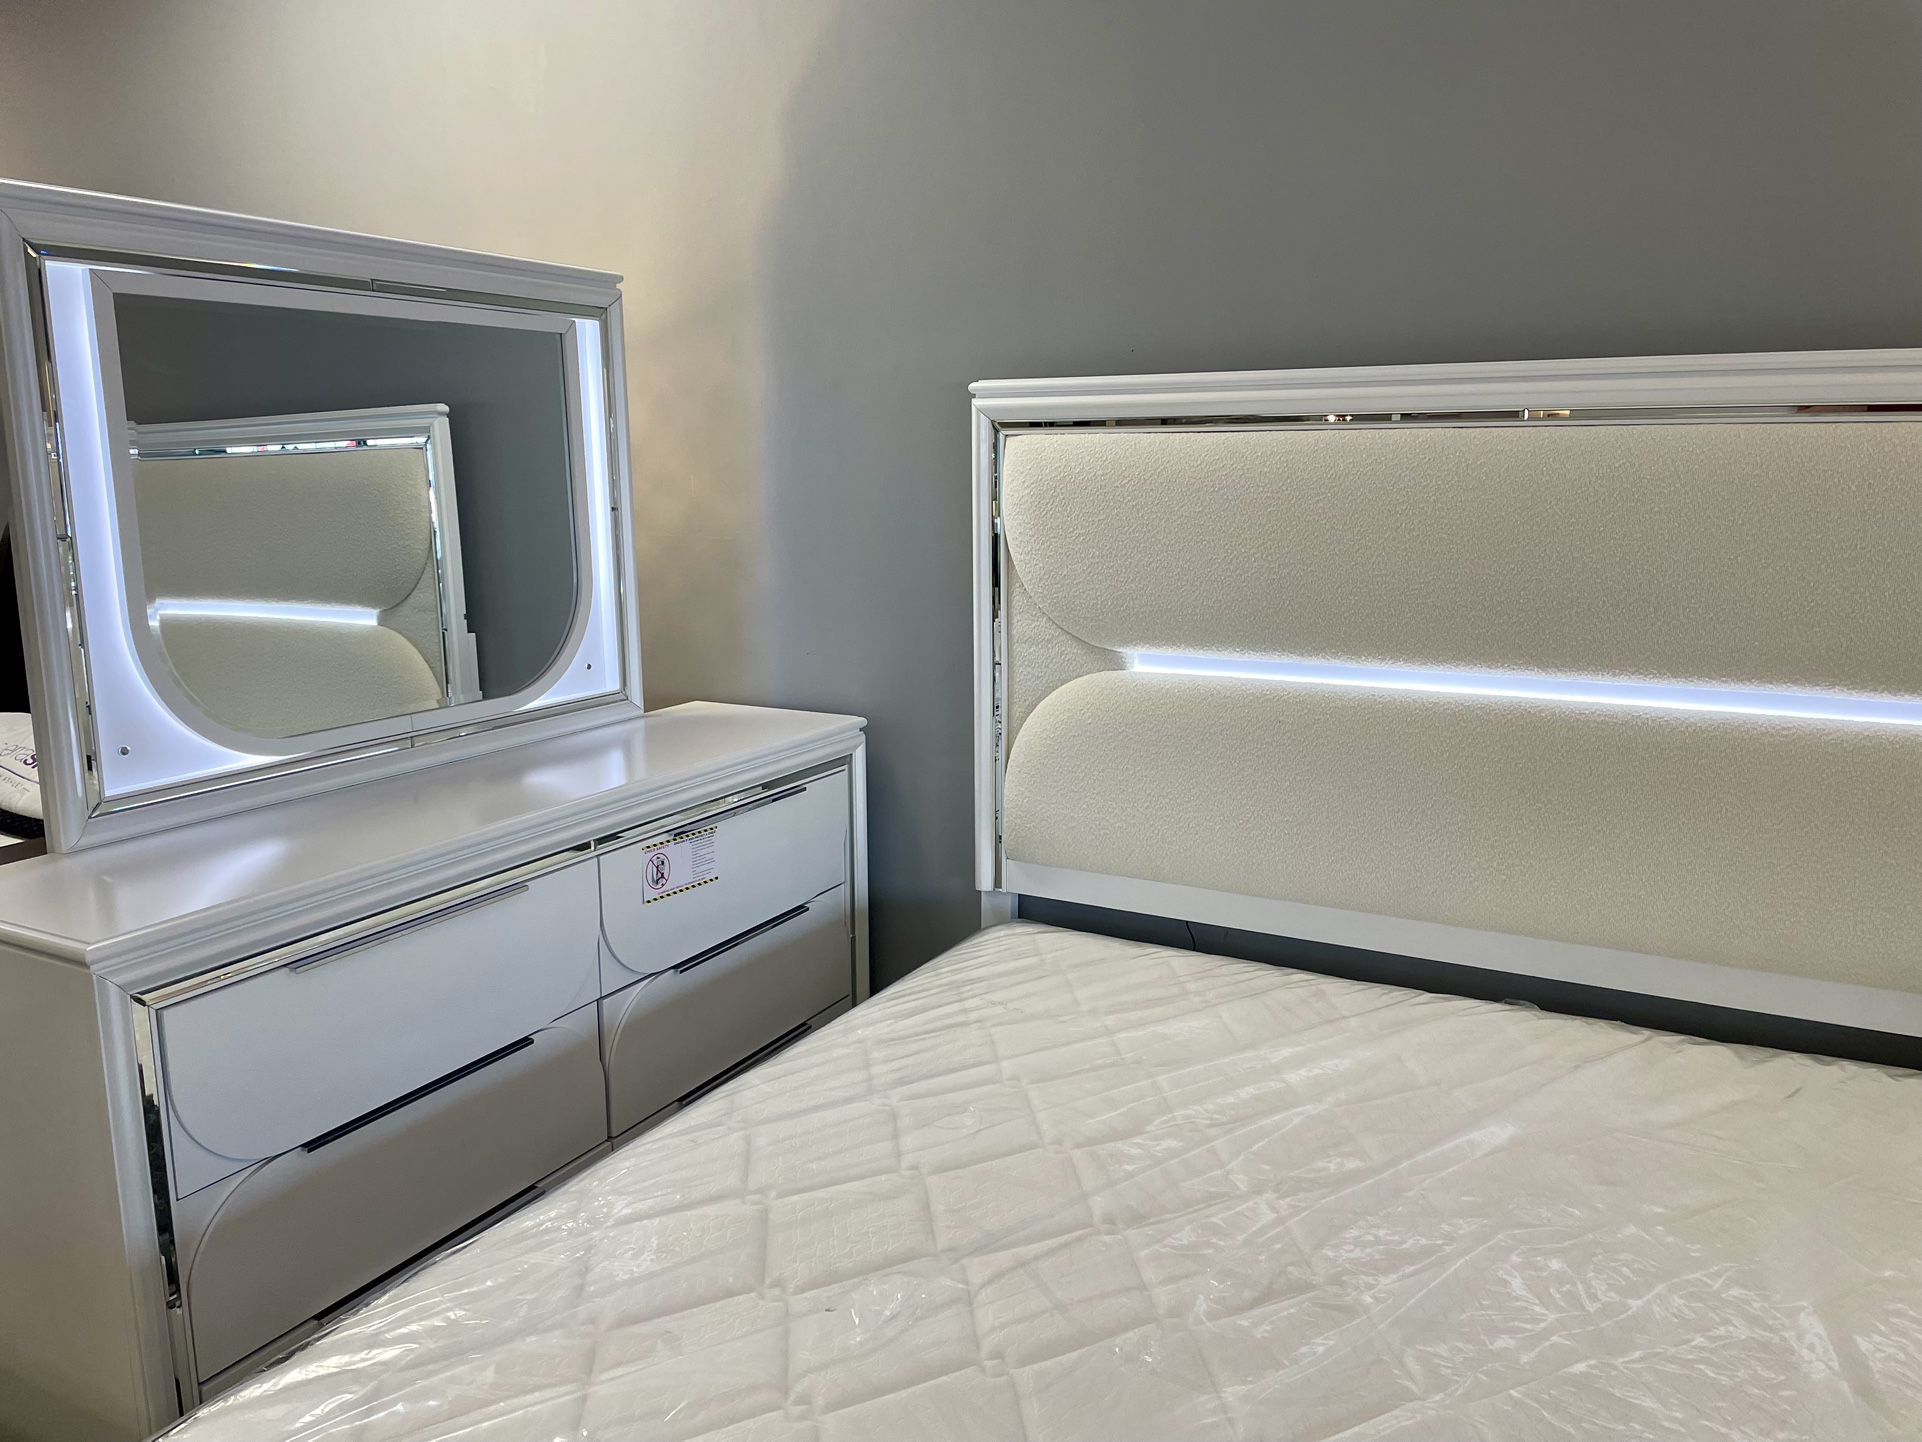 Eden White Panel Bedroom Set, Nightstand, Bed Frame, Mattress, Dresser, Mirror Options